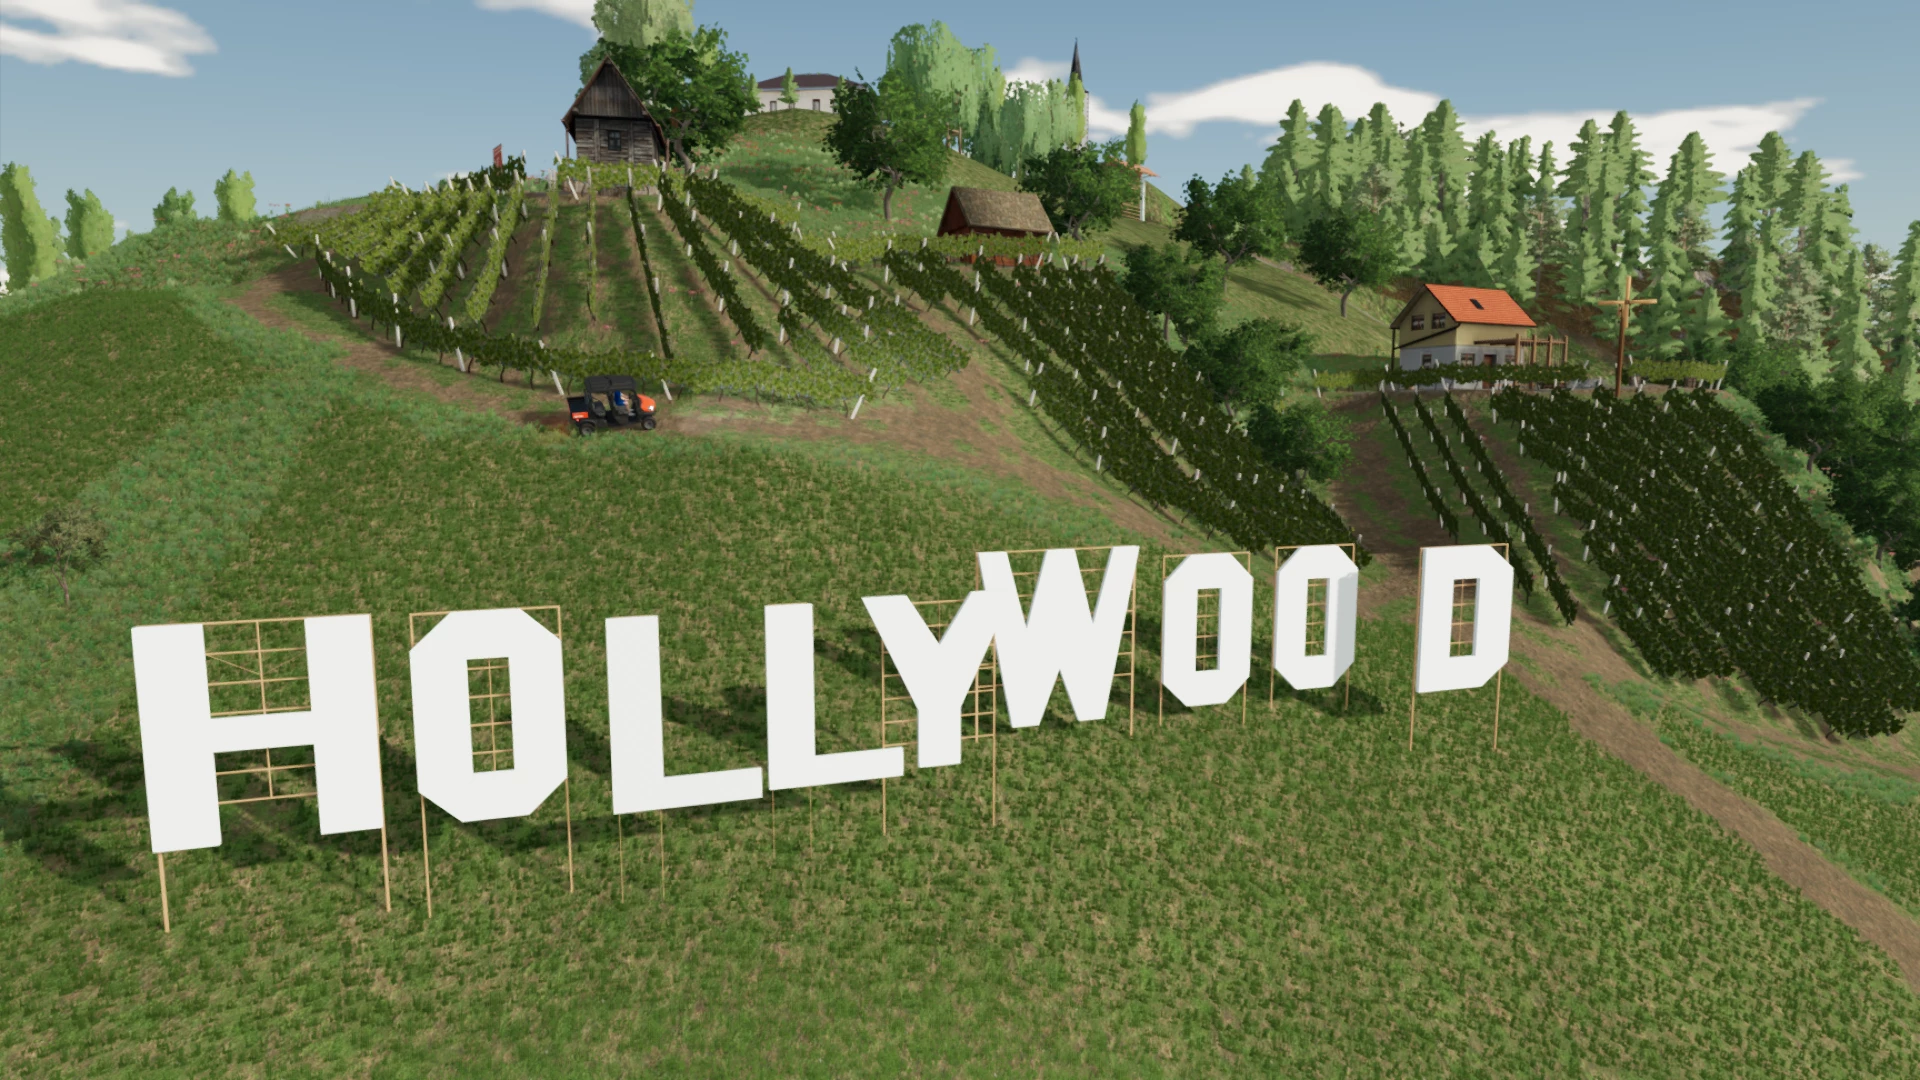 "Hollywood"  literally    :)